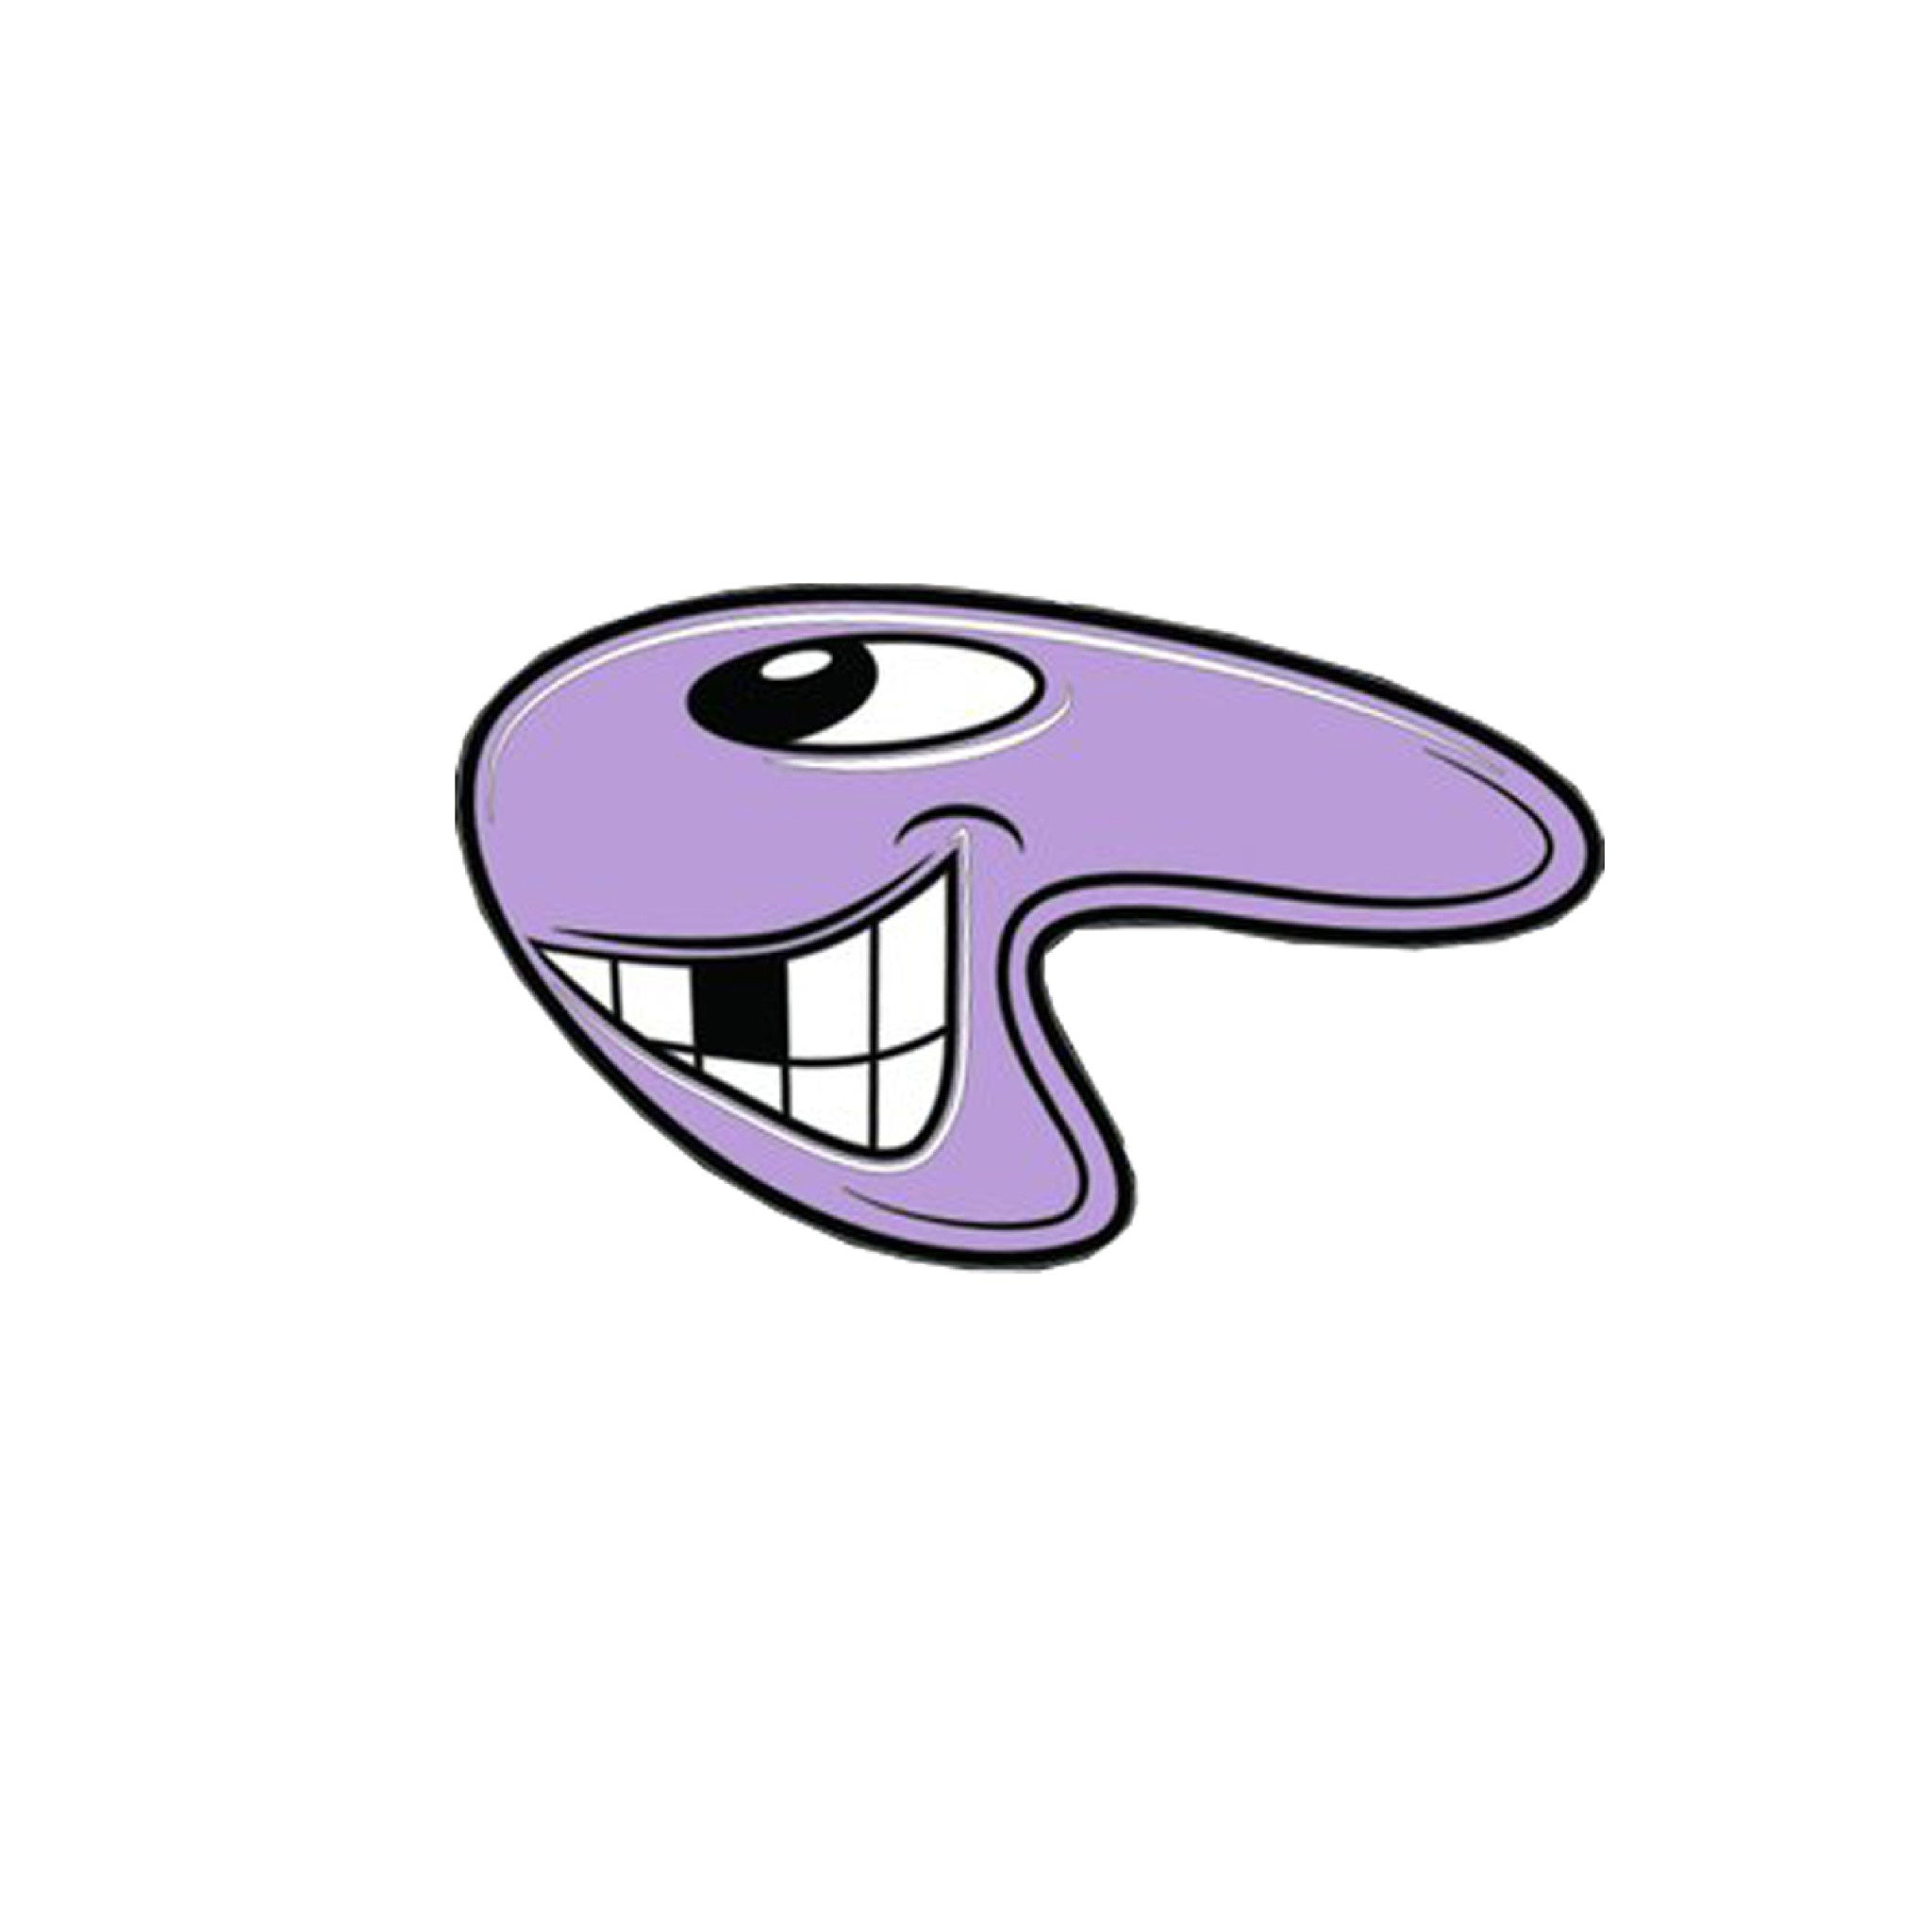 Kenny Scharf Speedy Pin - Purple - Wynwood Walls Shop